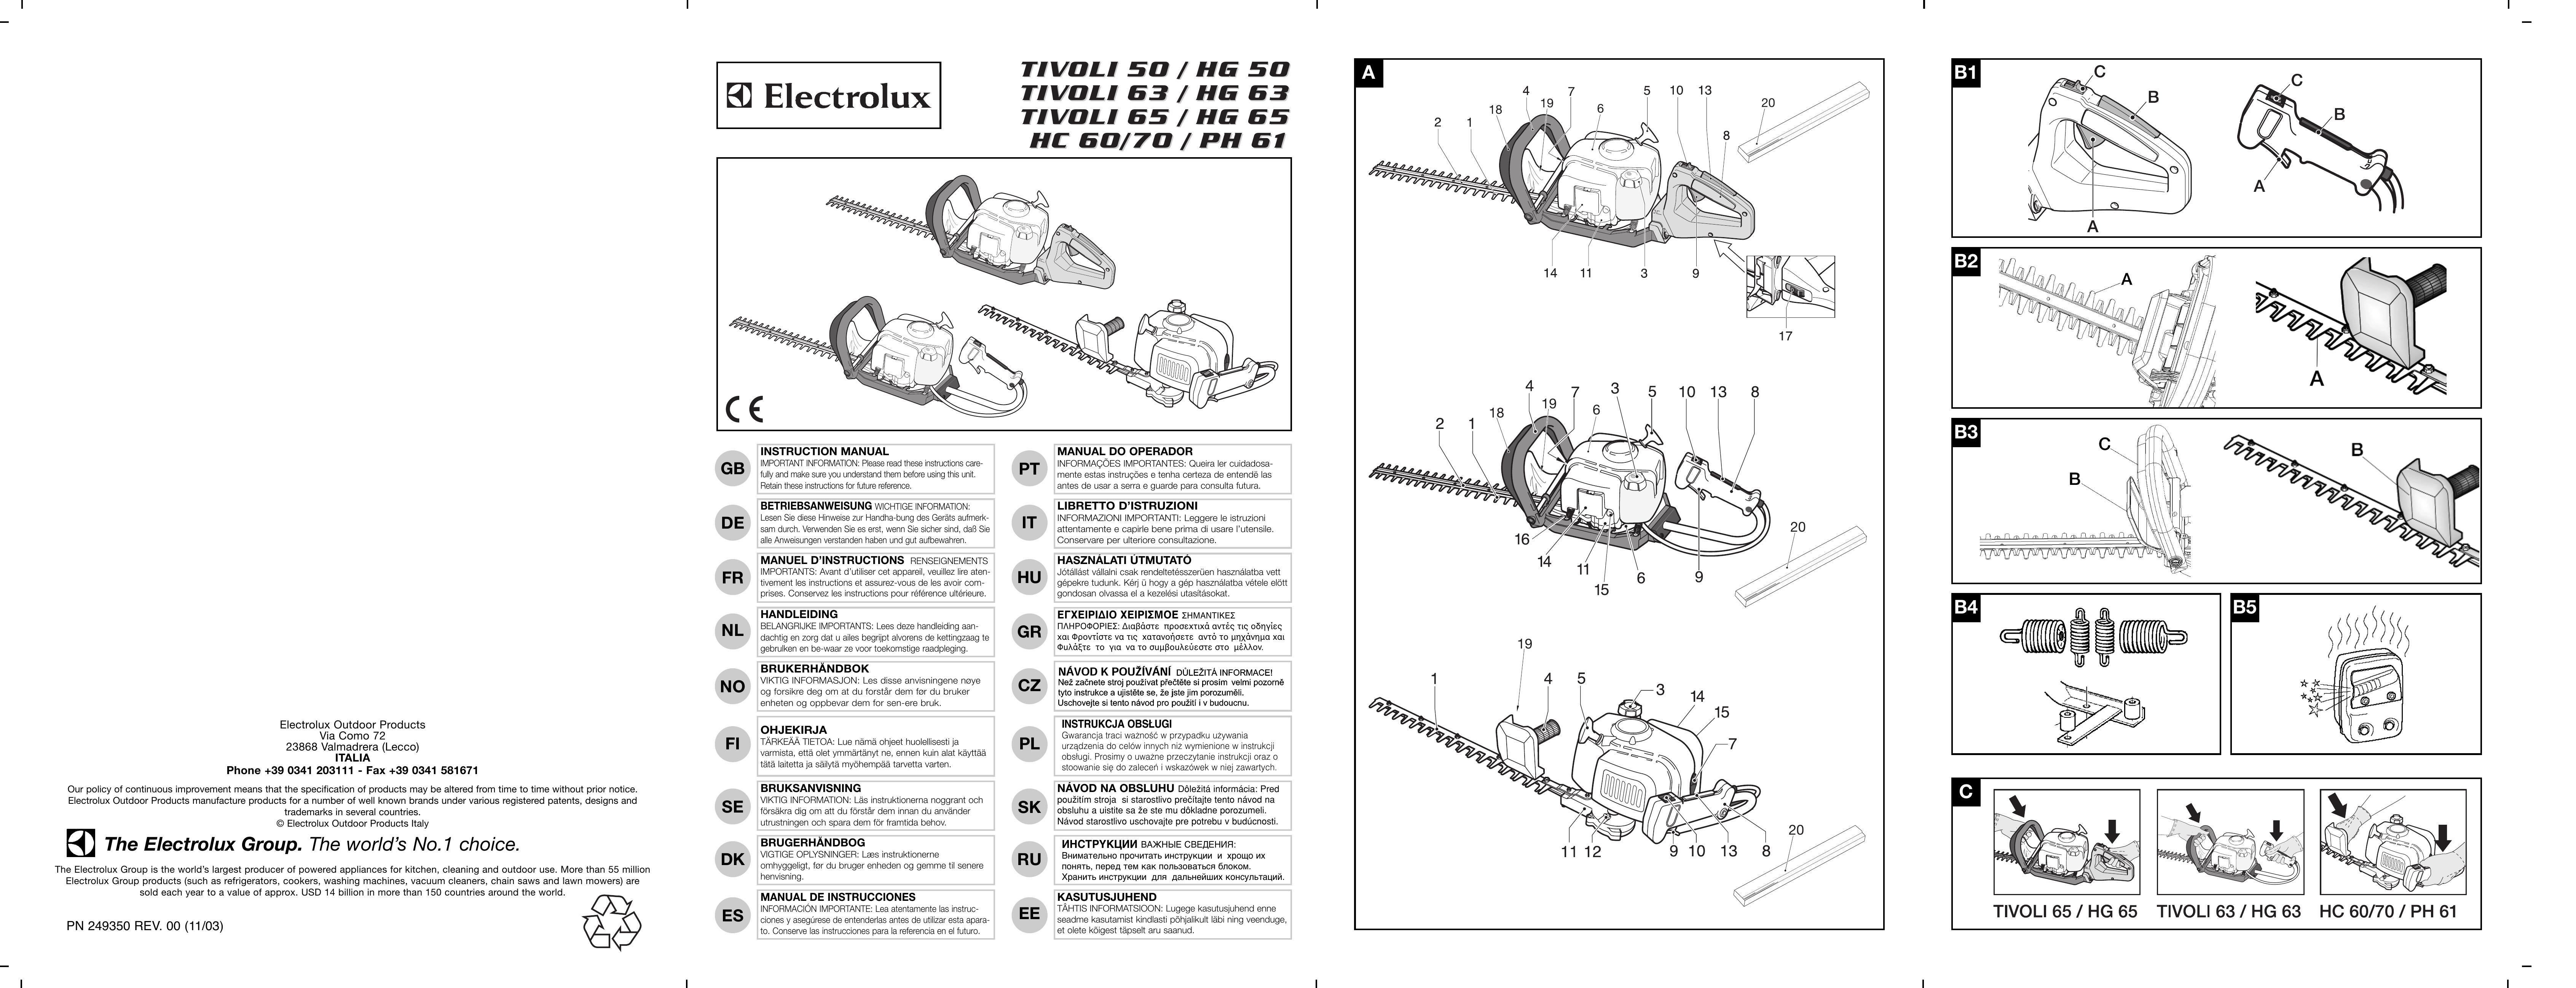 Electrolux PH 6HC 60 Sprinkler User Manual